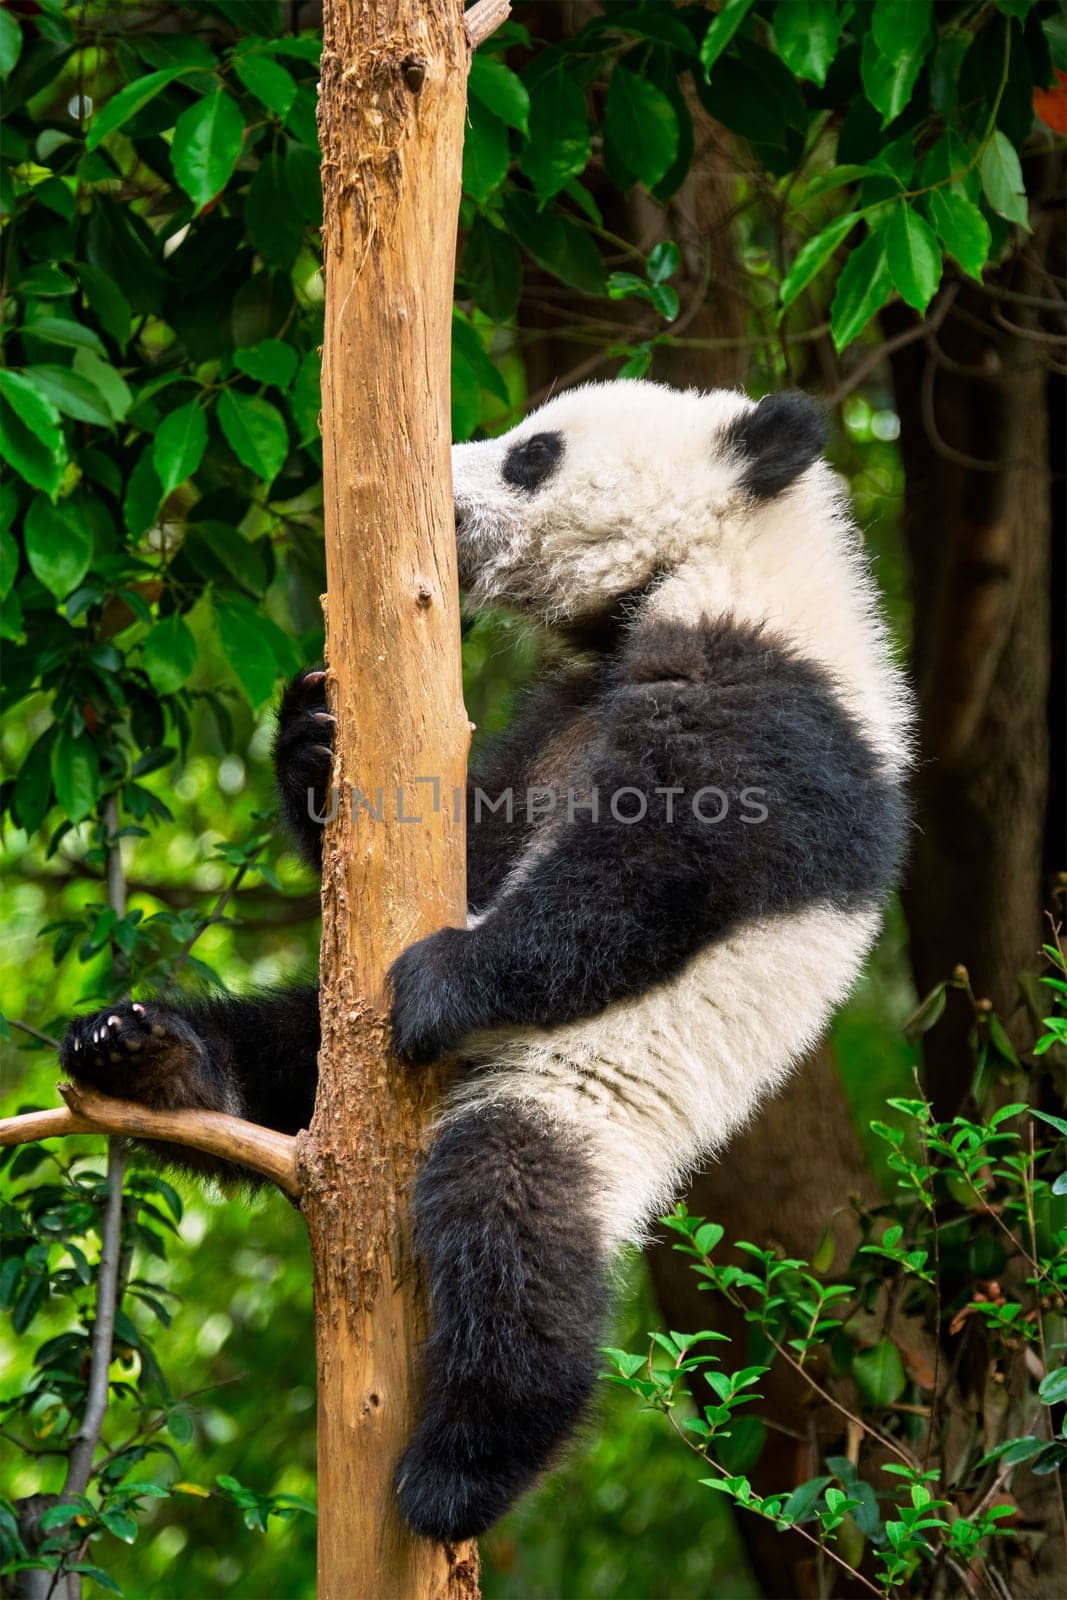 Giant panda bear in China by dimol